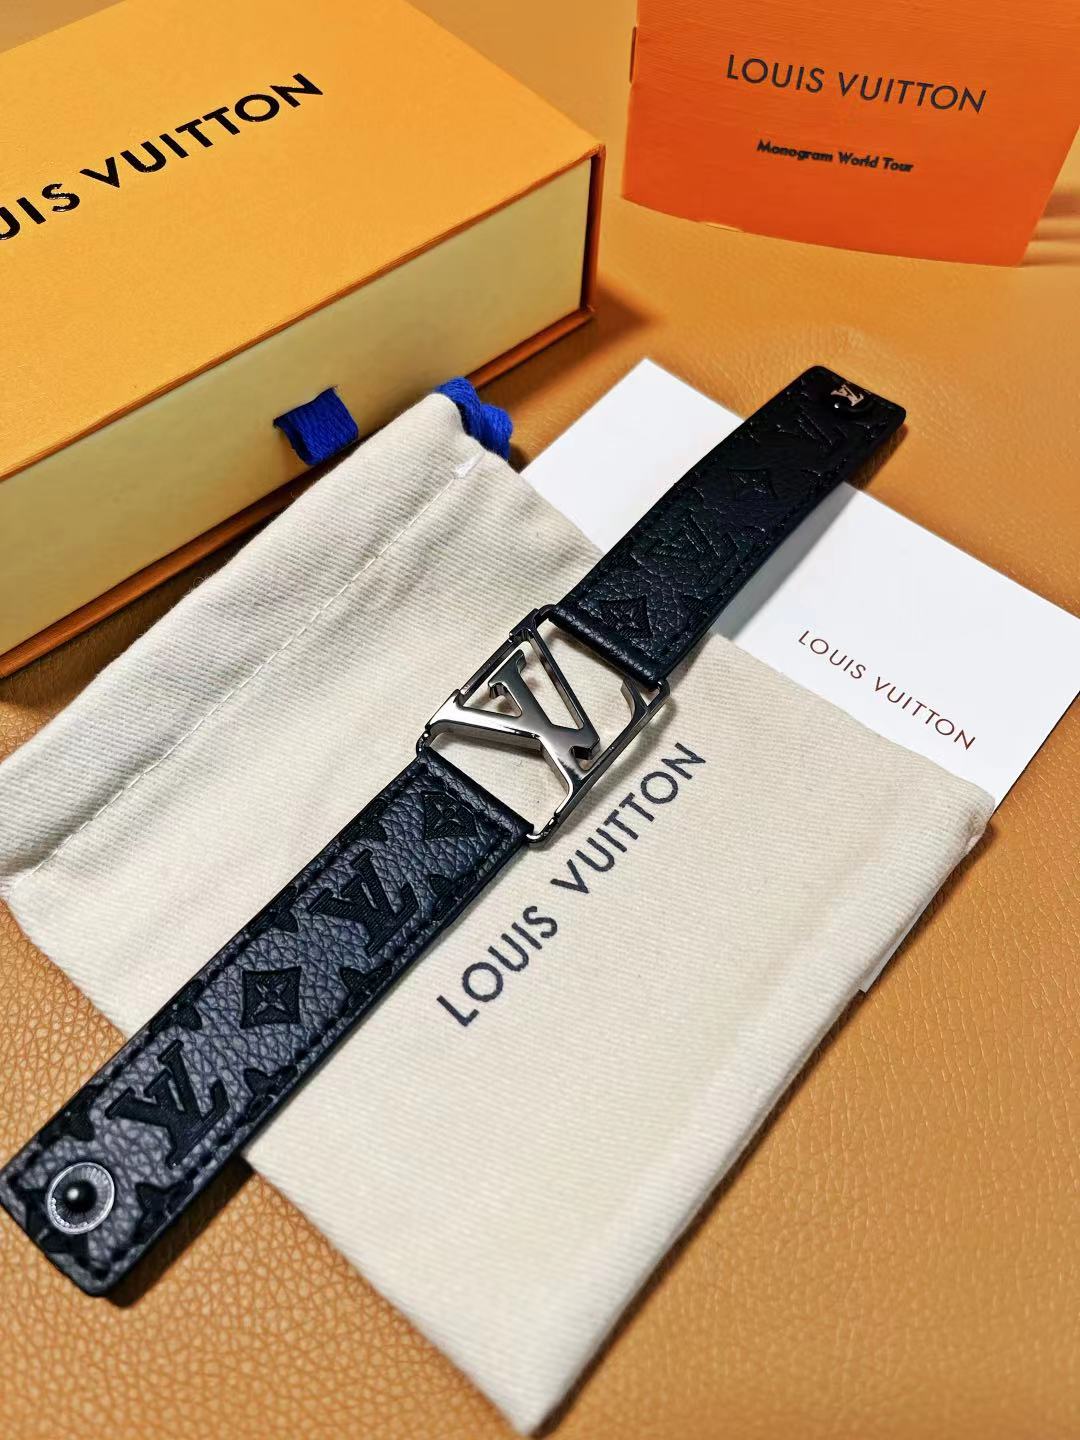 La mejor réplica
 Louis Vuitton Joyas Pulsera Negro